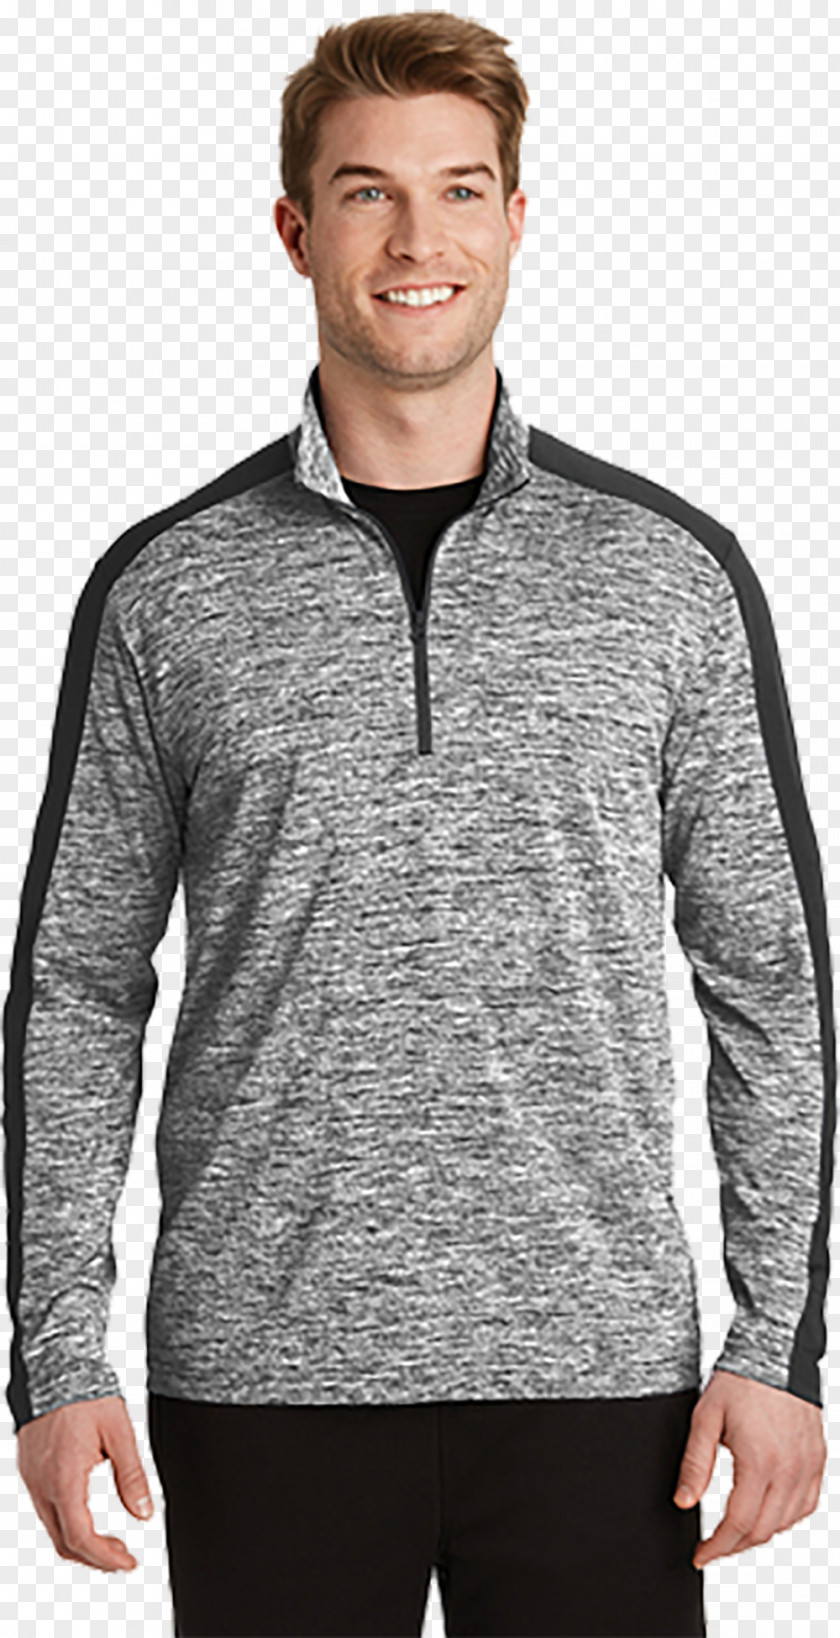 Garments Model Hoodie T-shirt Sweater Polar Fleece Sport PNG